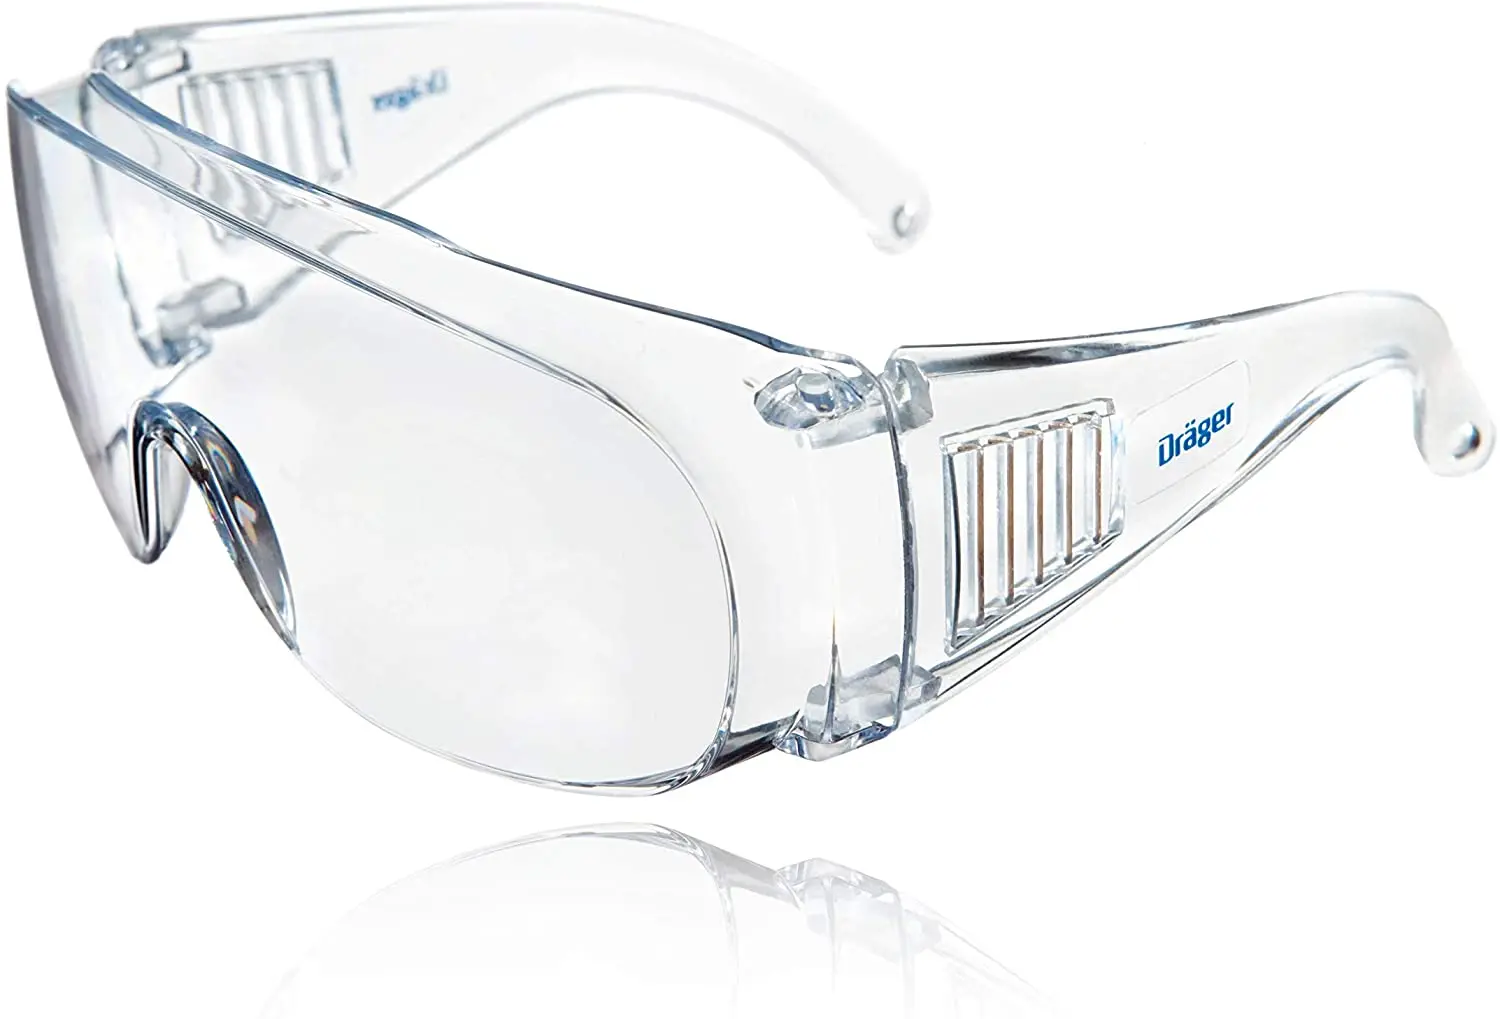 Очки защитные поликарбонатные. Drager очки защитные. Dräger очки солнцезащитные. Uvex Drager цена. Pect.